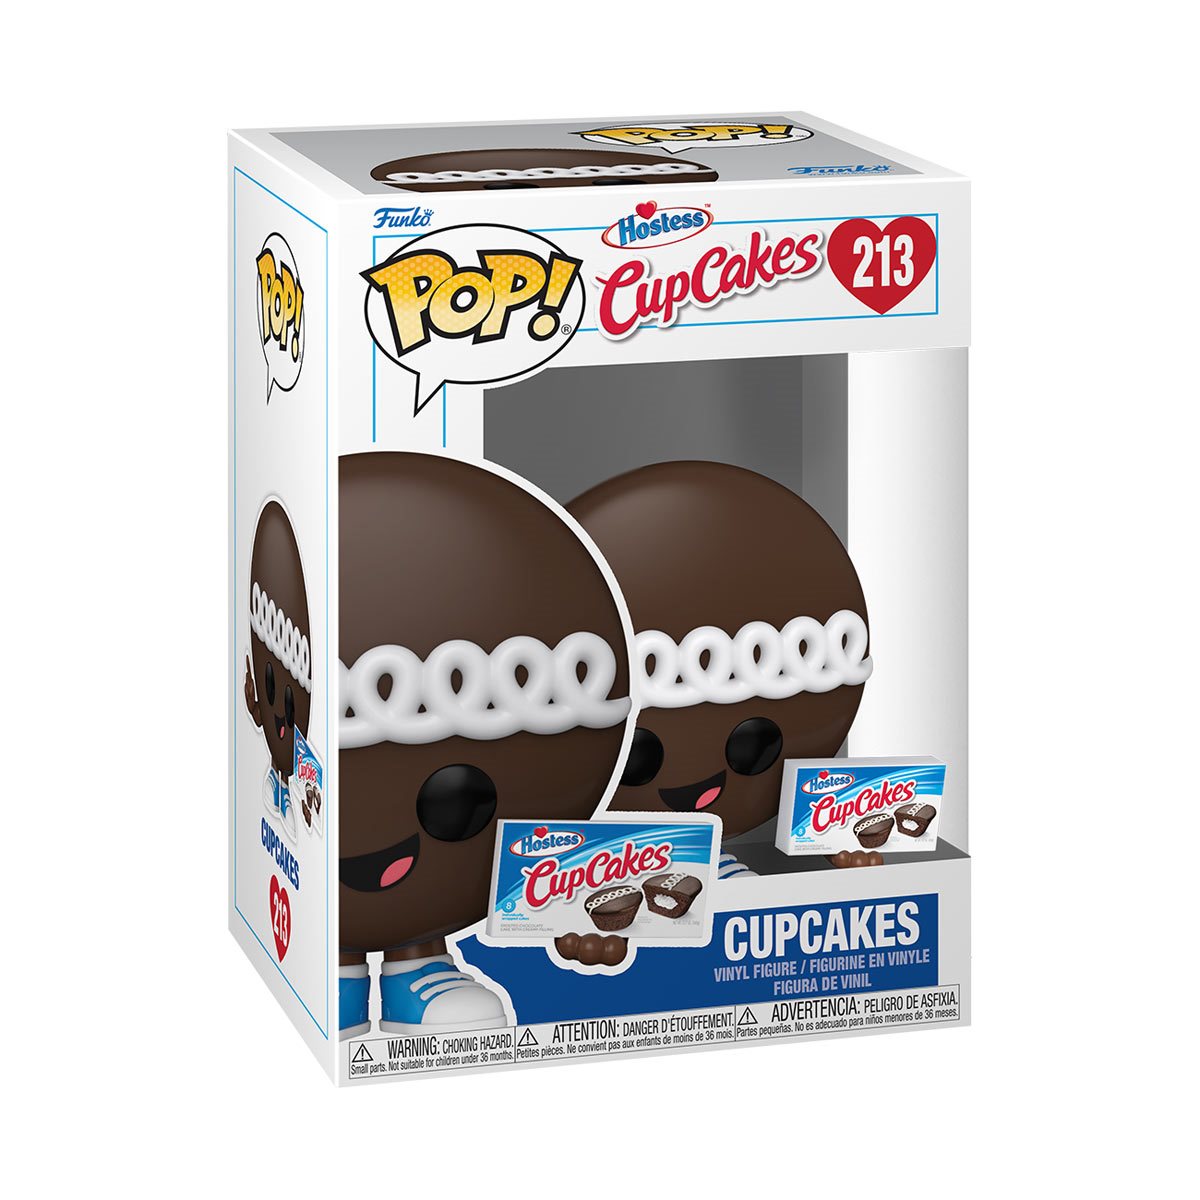 Funko Pop! Hostess Cupcakes Foodies Vinyl Figure #213